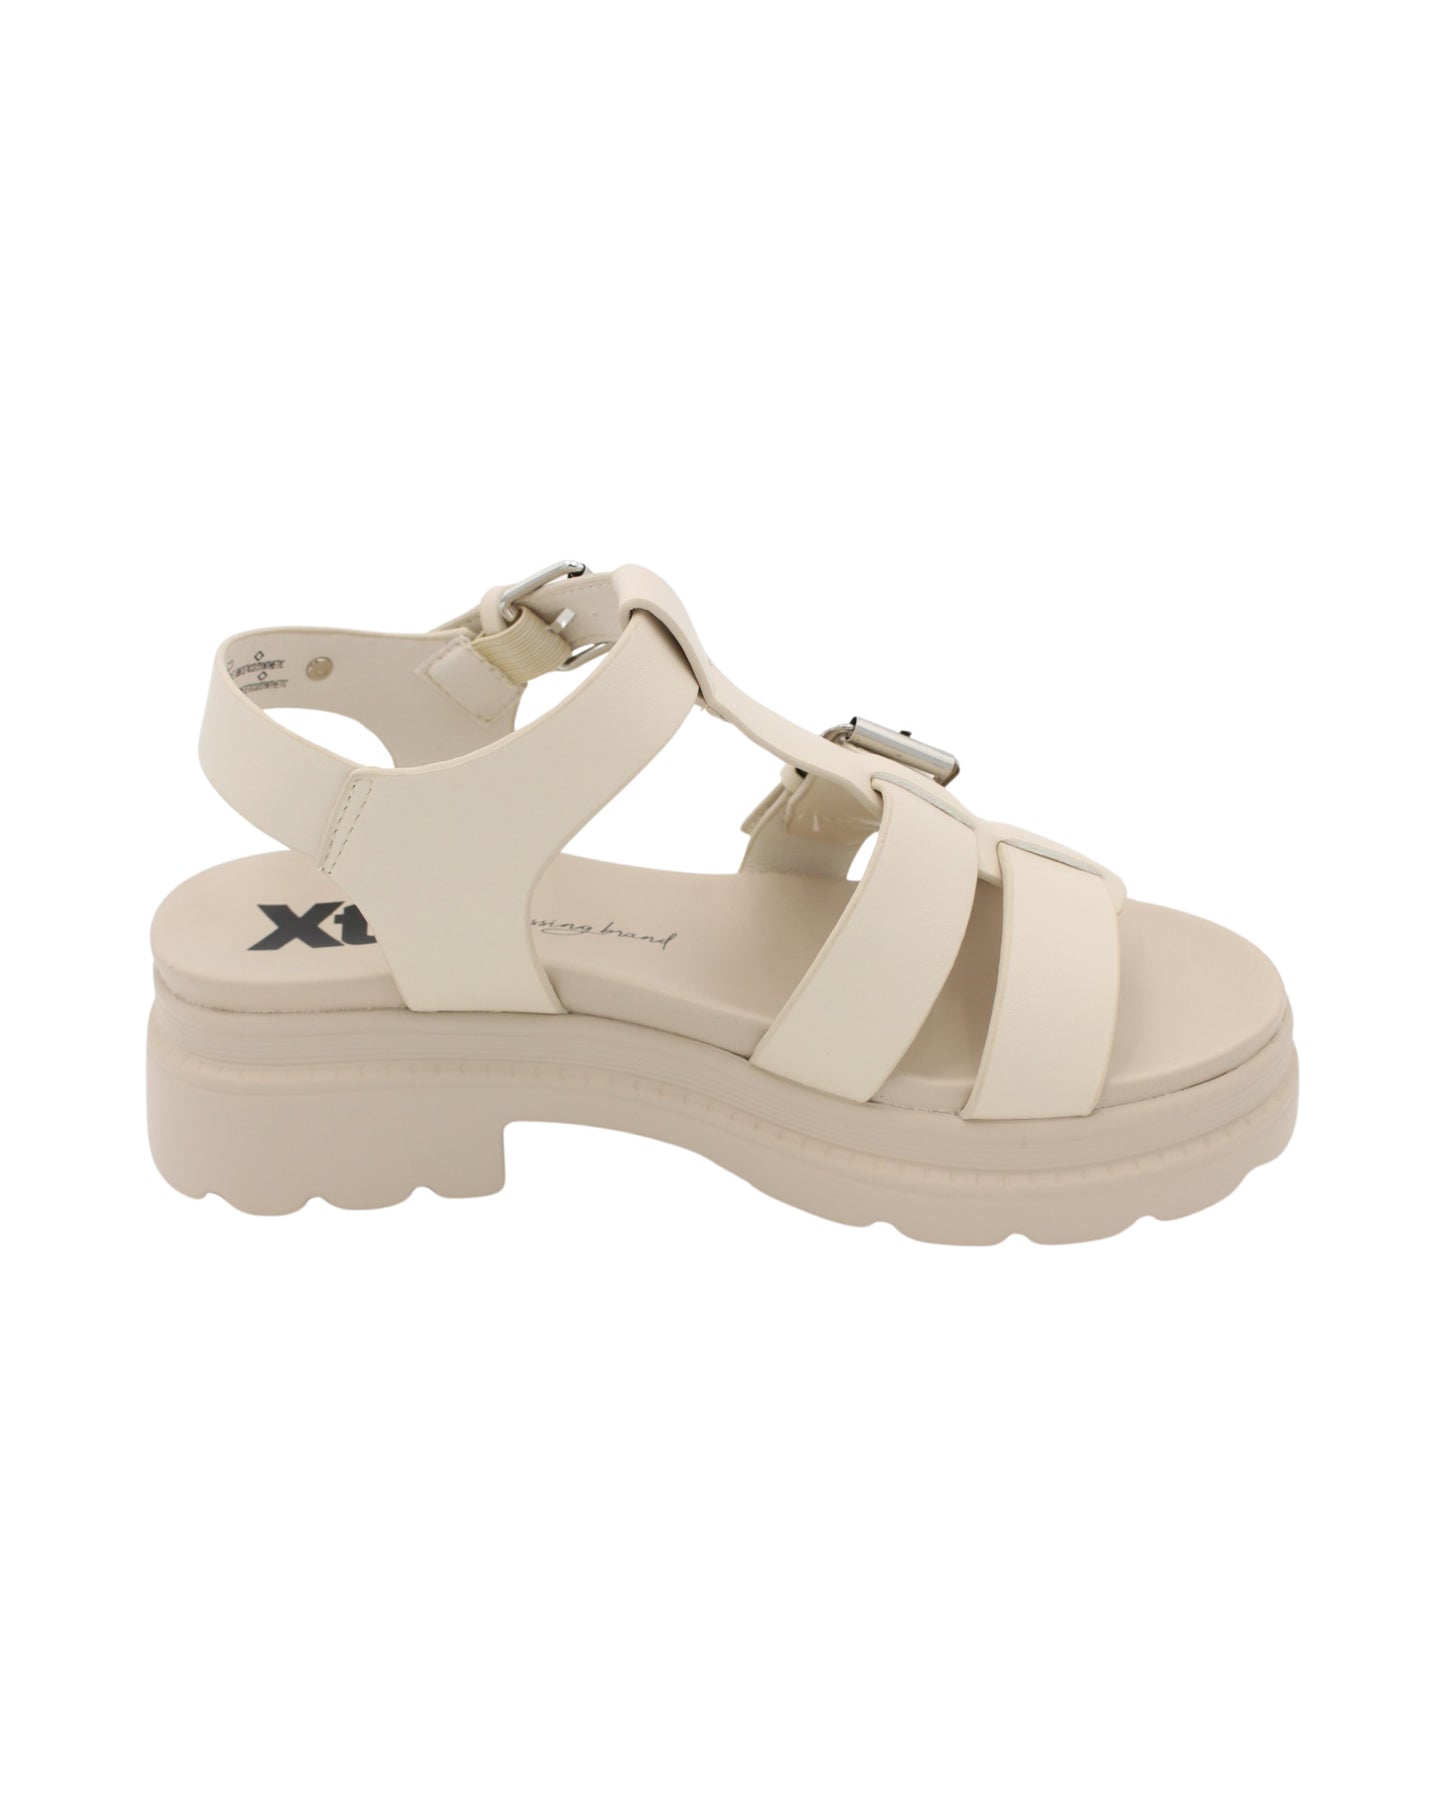 Xti - Ladies Shoes Sandals Ice (2073)